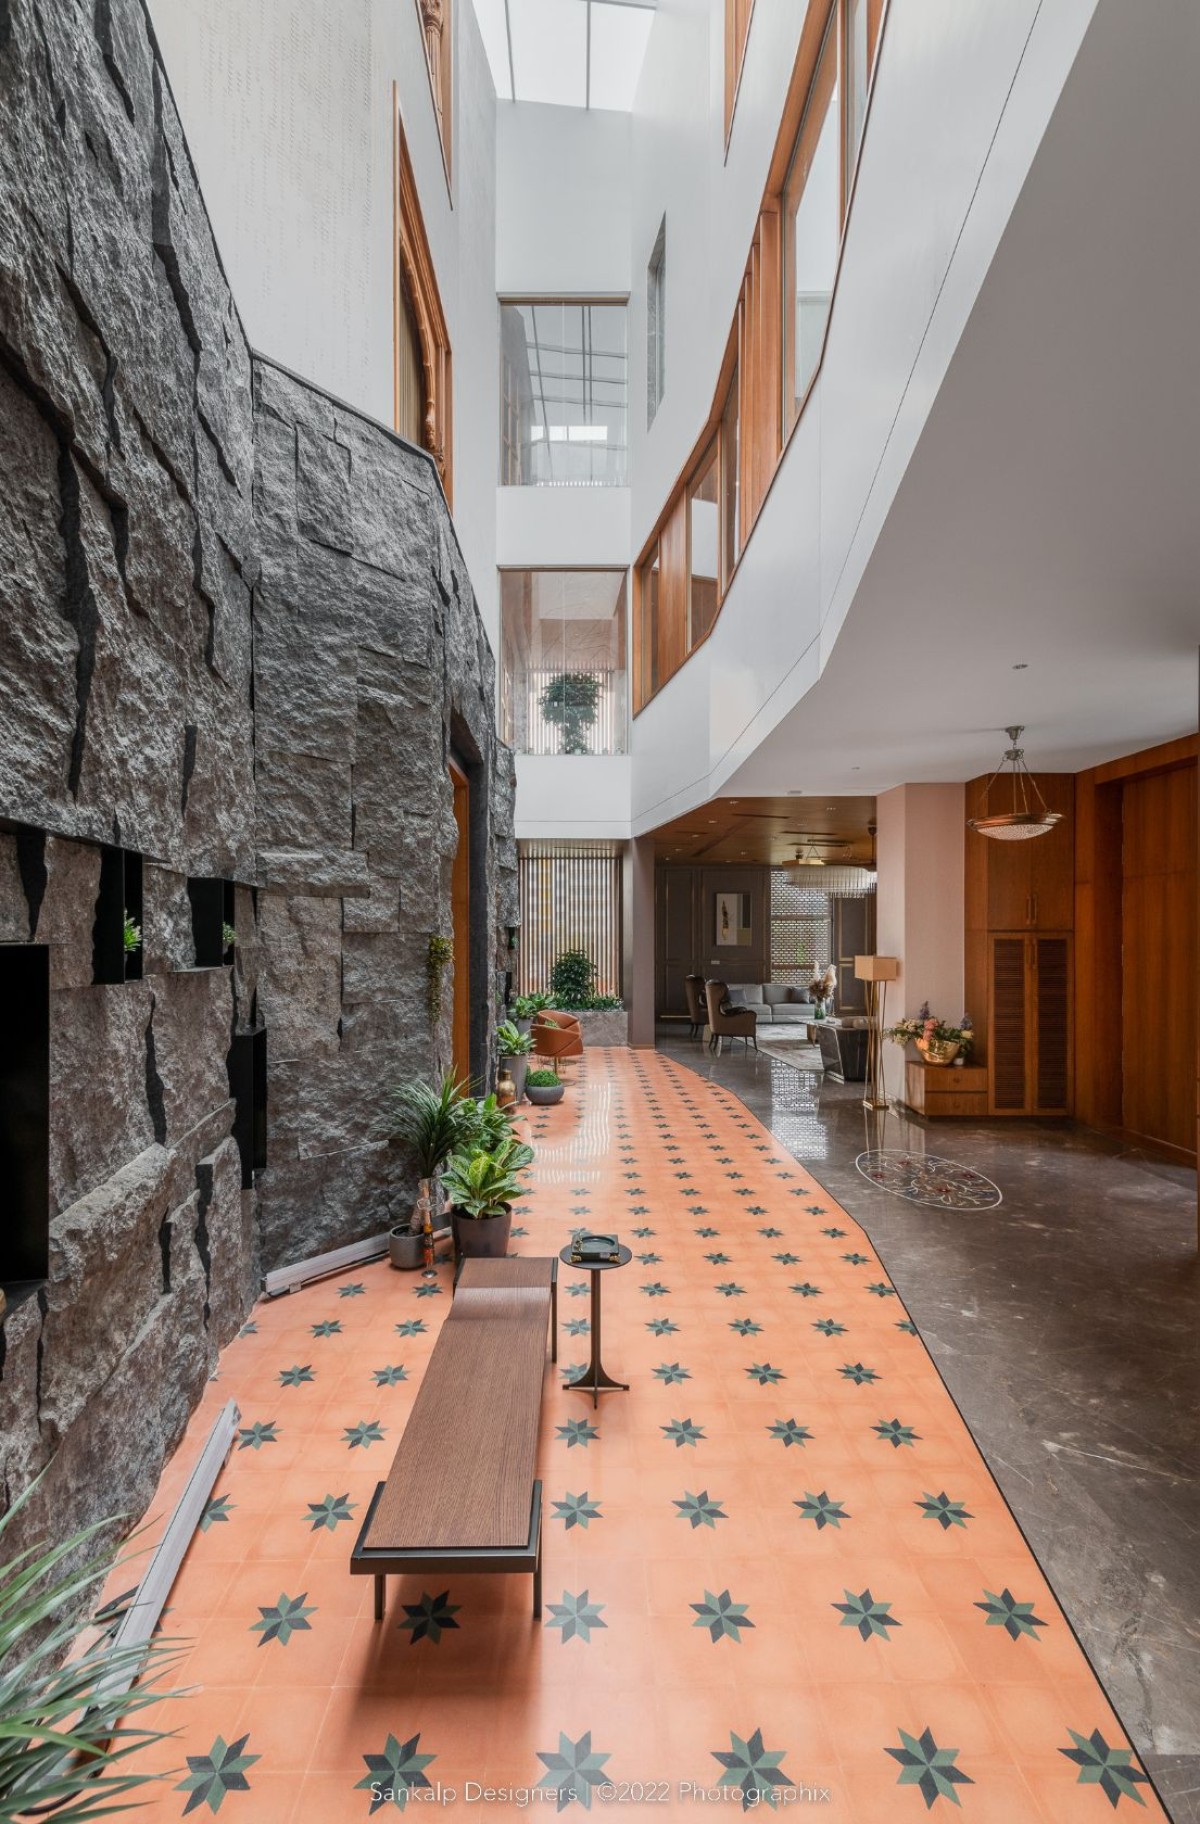 Passage of Bhise Residence by Sankalp Designers